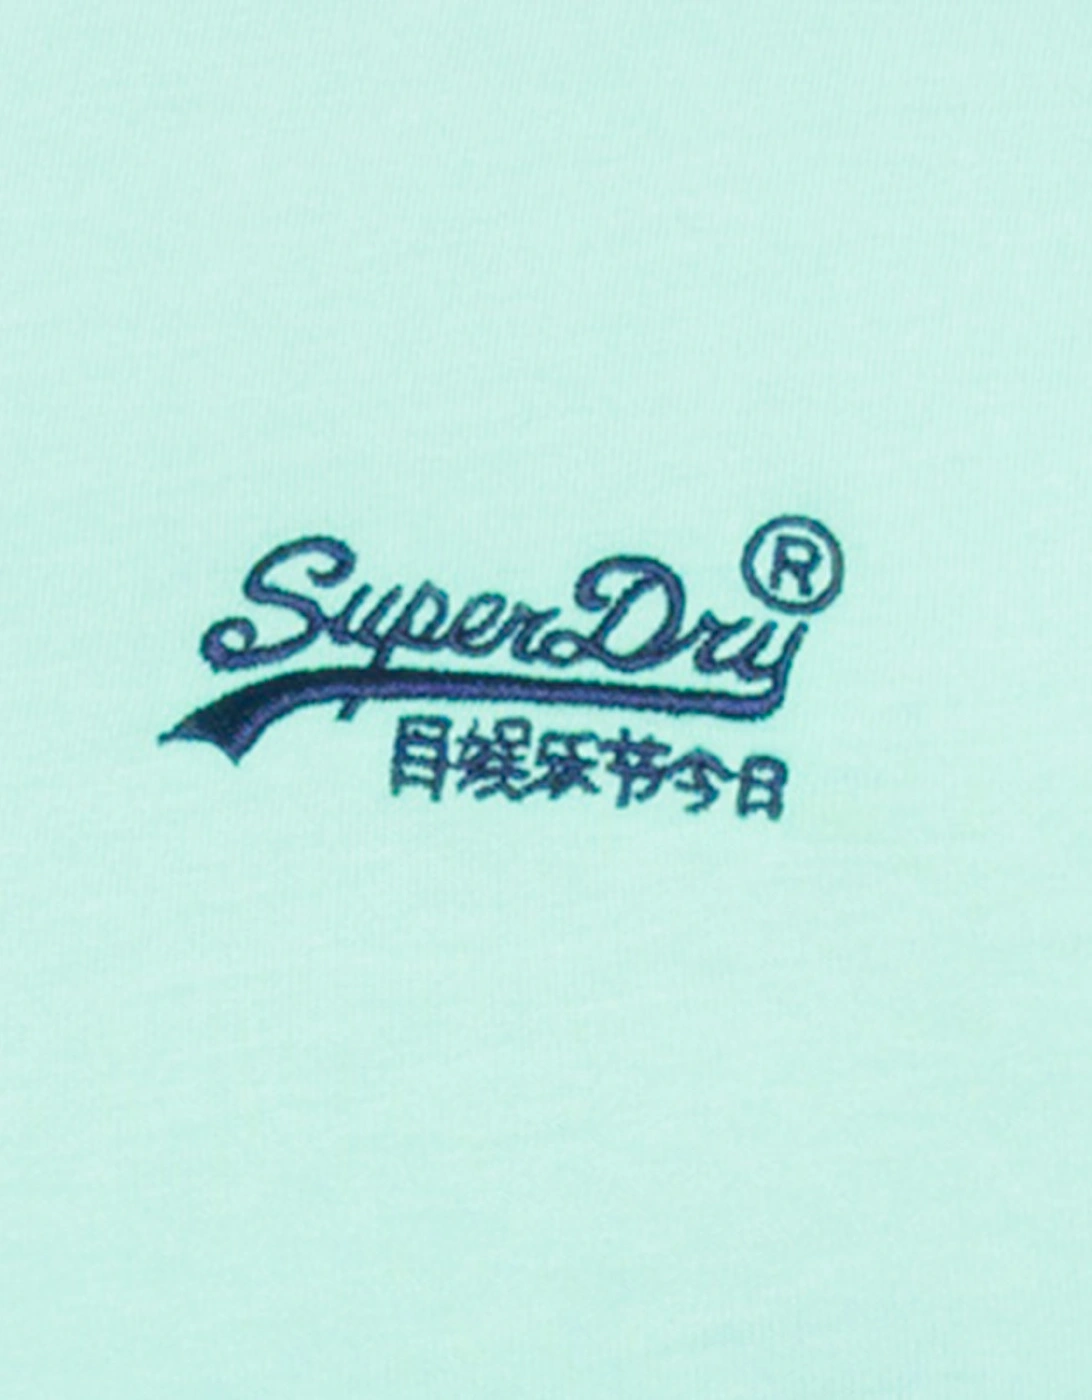 Mens Solid Vintage Logo T-Shirt (Spearmint)